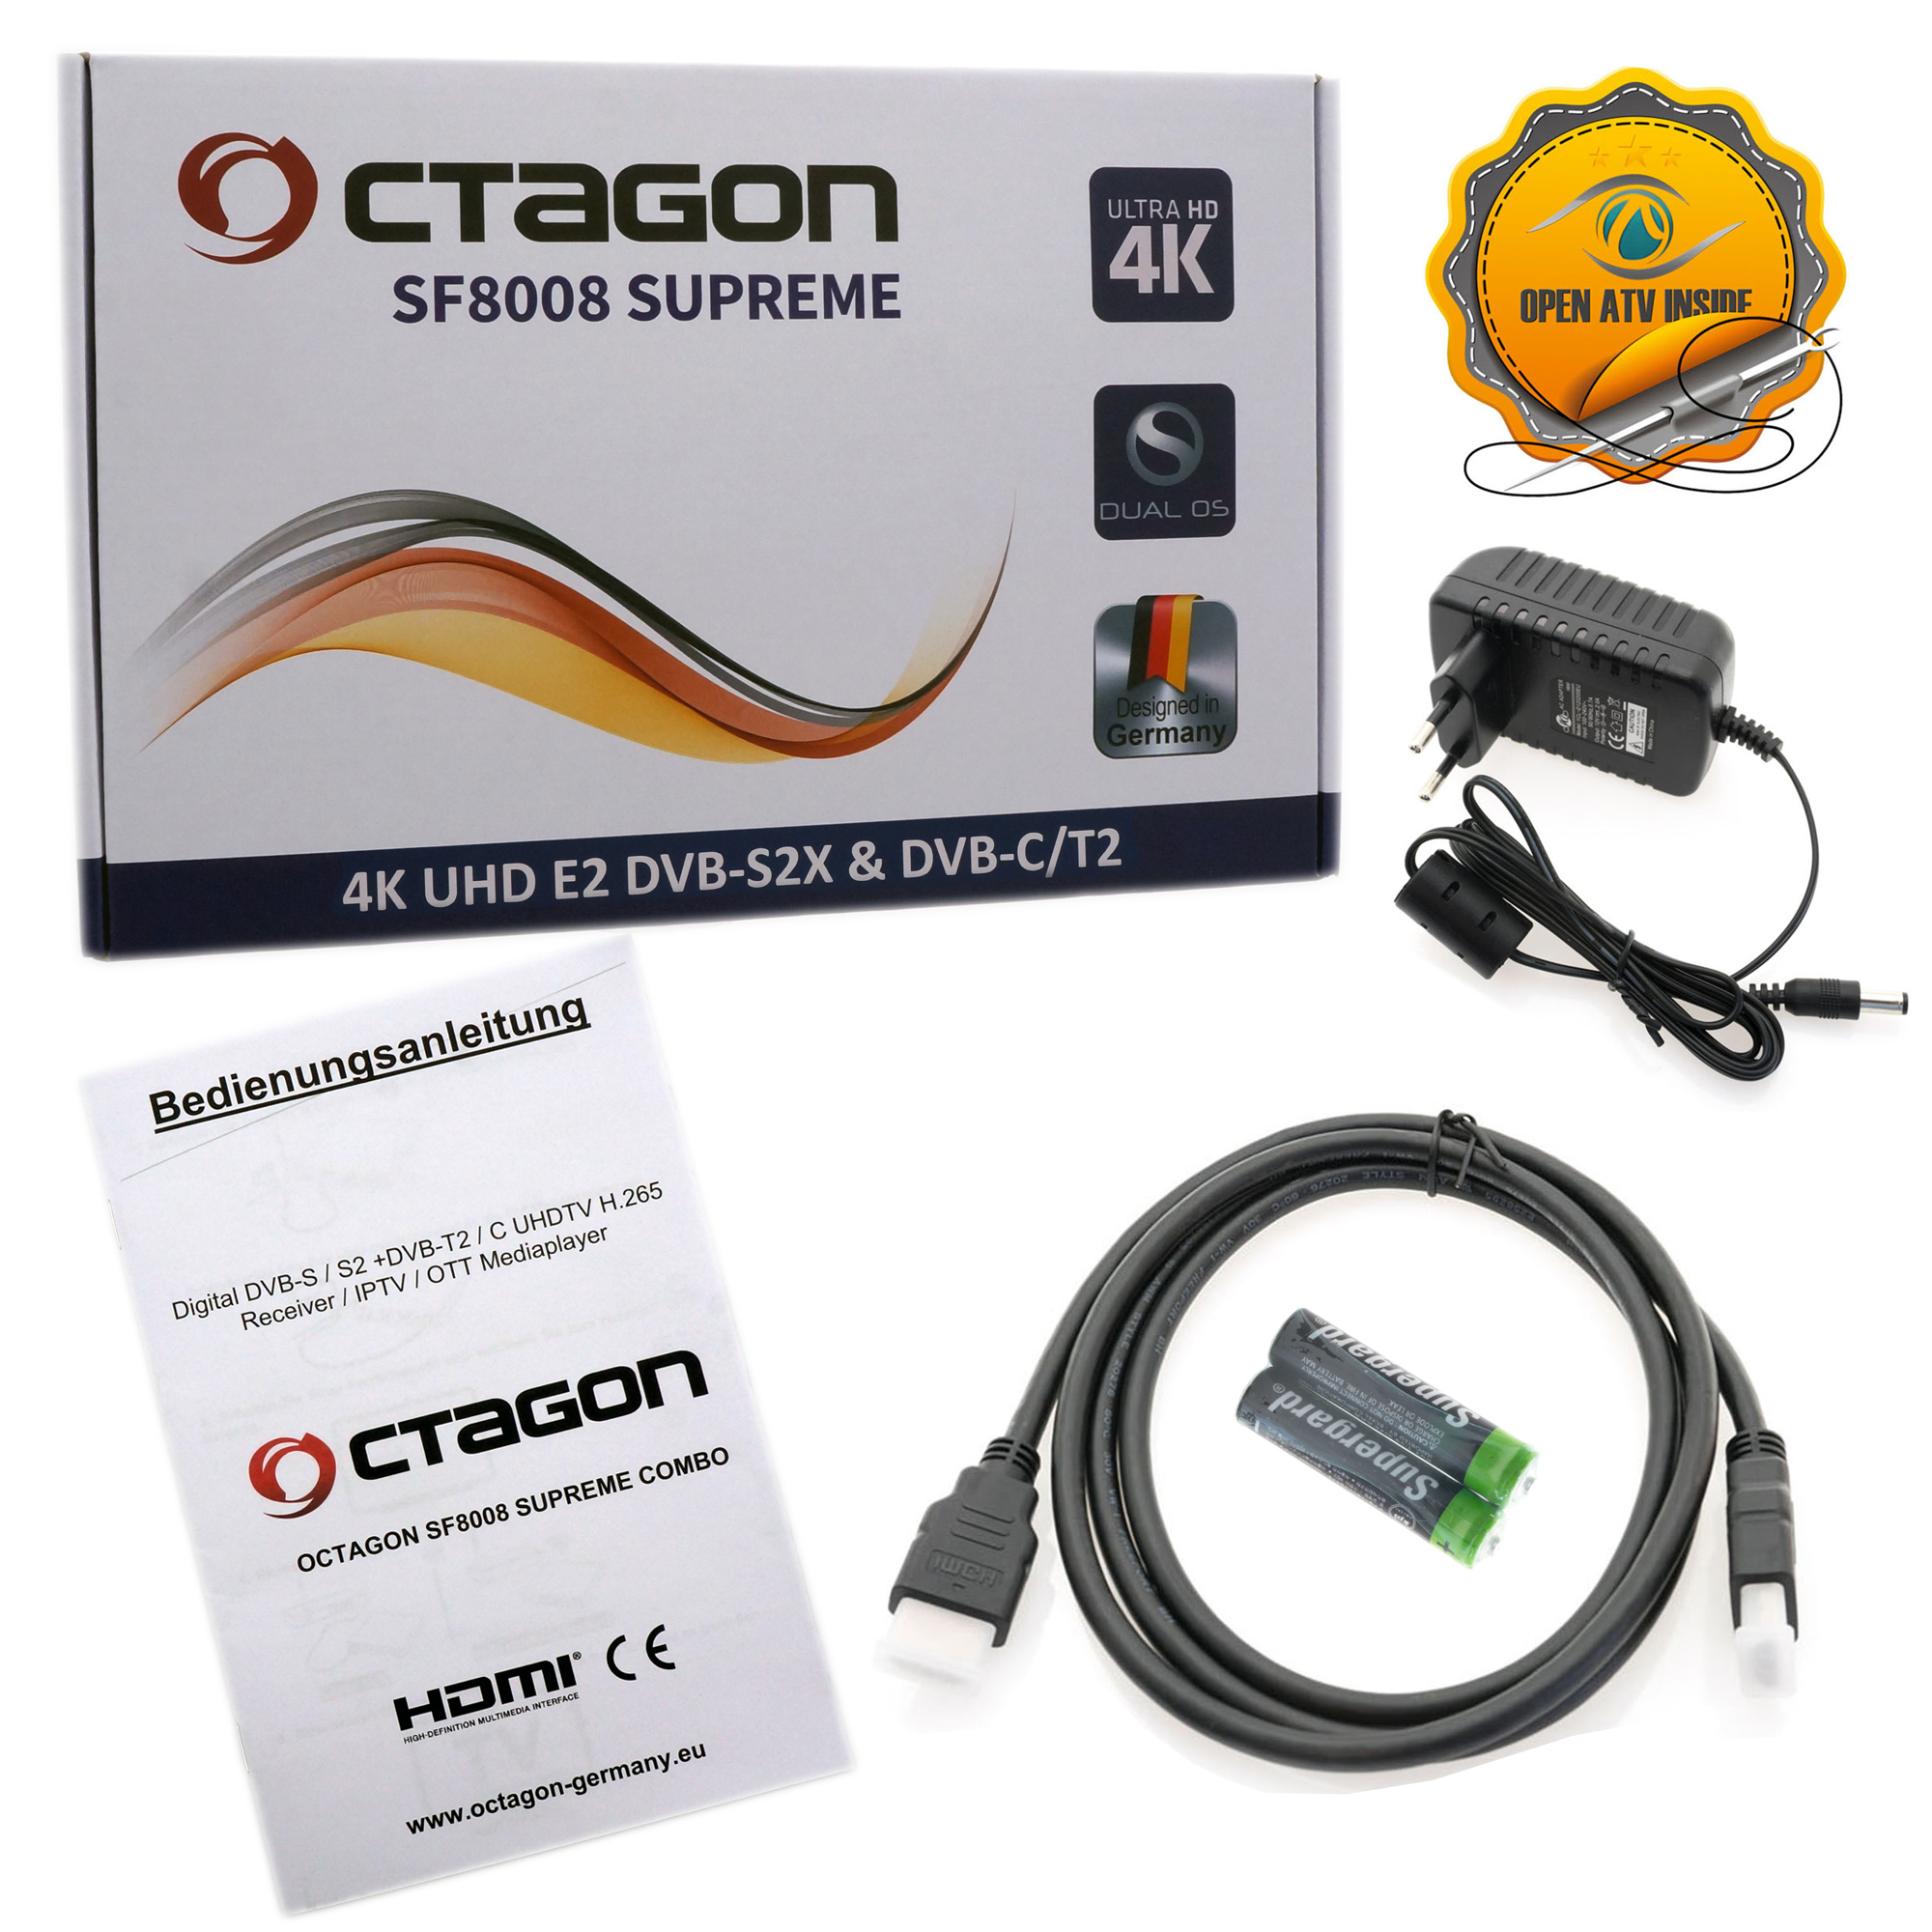 OCTAGON SF8008 SUPREME 4K Combo SSD 250GB UHD Linux & Receiver E2 Receiver DVB-S2X DVB-C/T2 (Twin Schwarz) Sat UHD 4K M.2 Tuner, mit